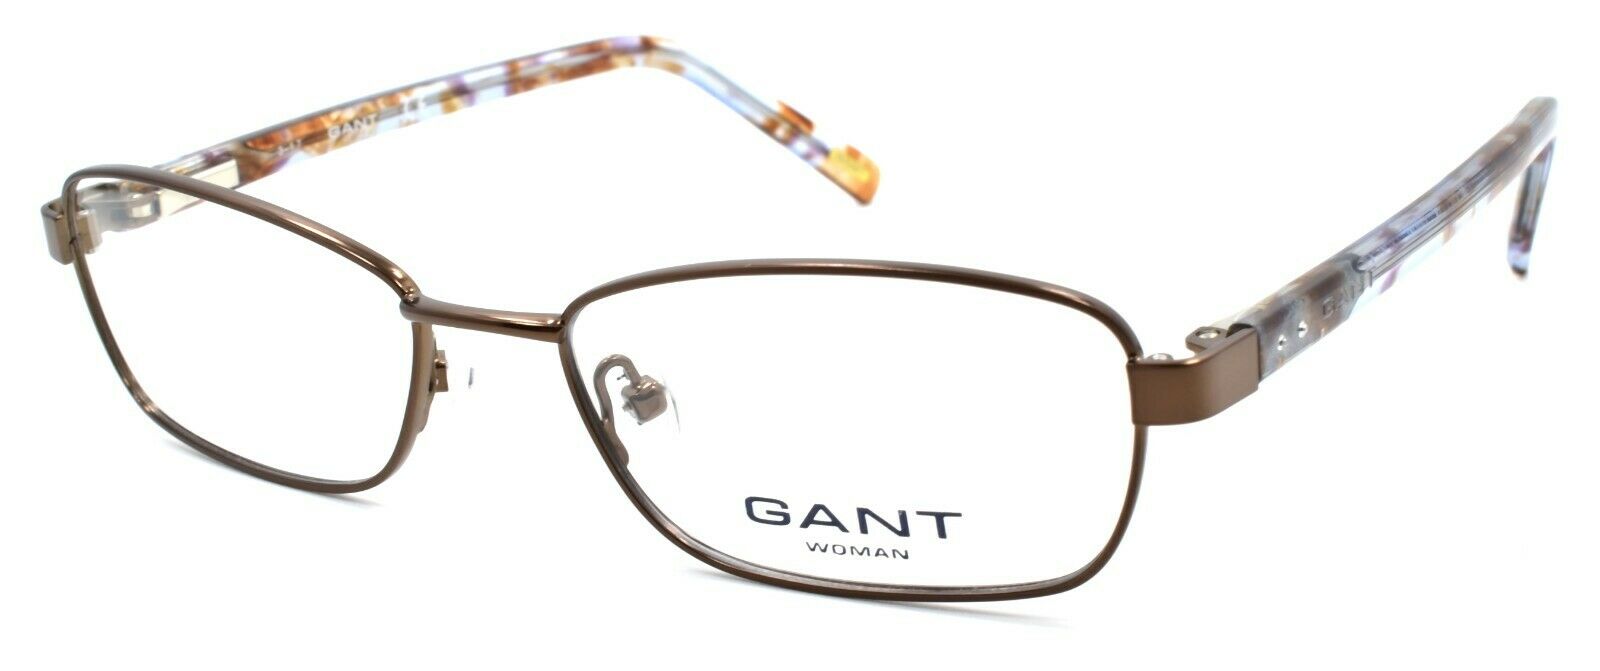 1-GANT GW Sierra SBRN Women's Eyeglasses Frames 51-16-135 Satin Brown-715583395329-IKSpecs